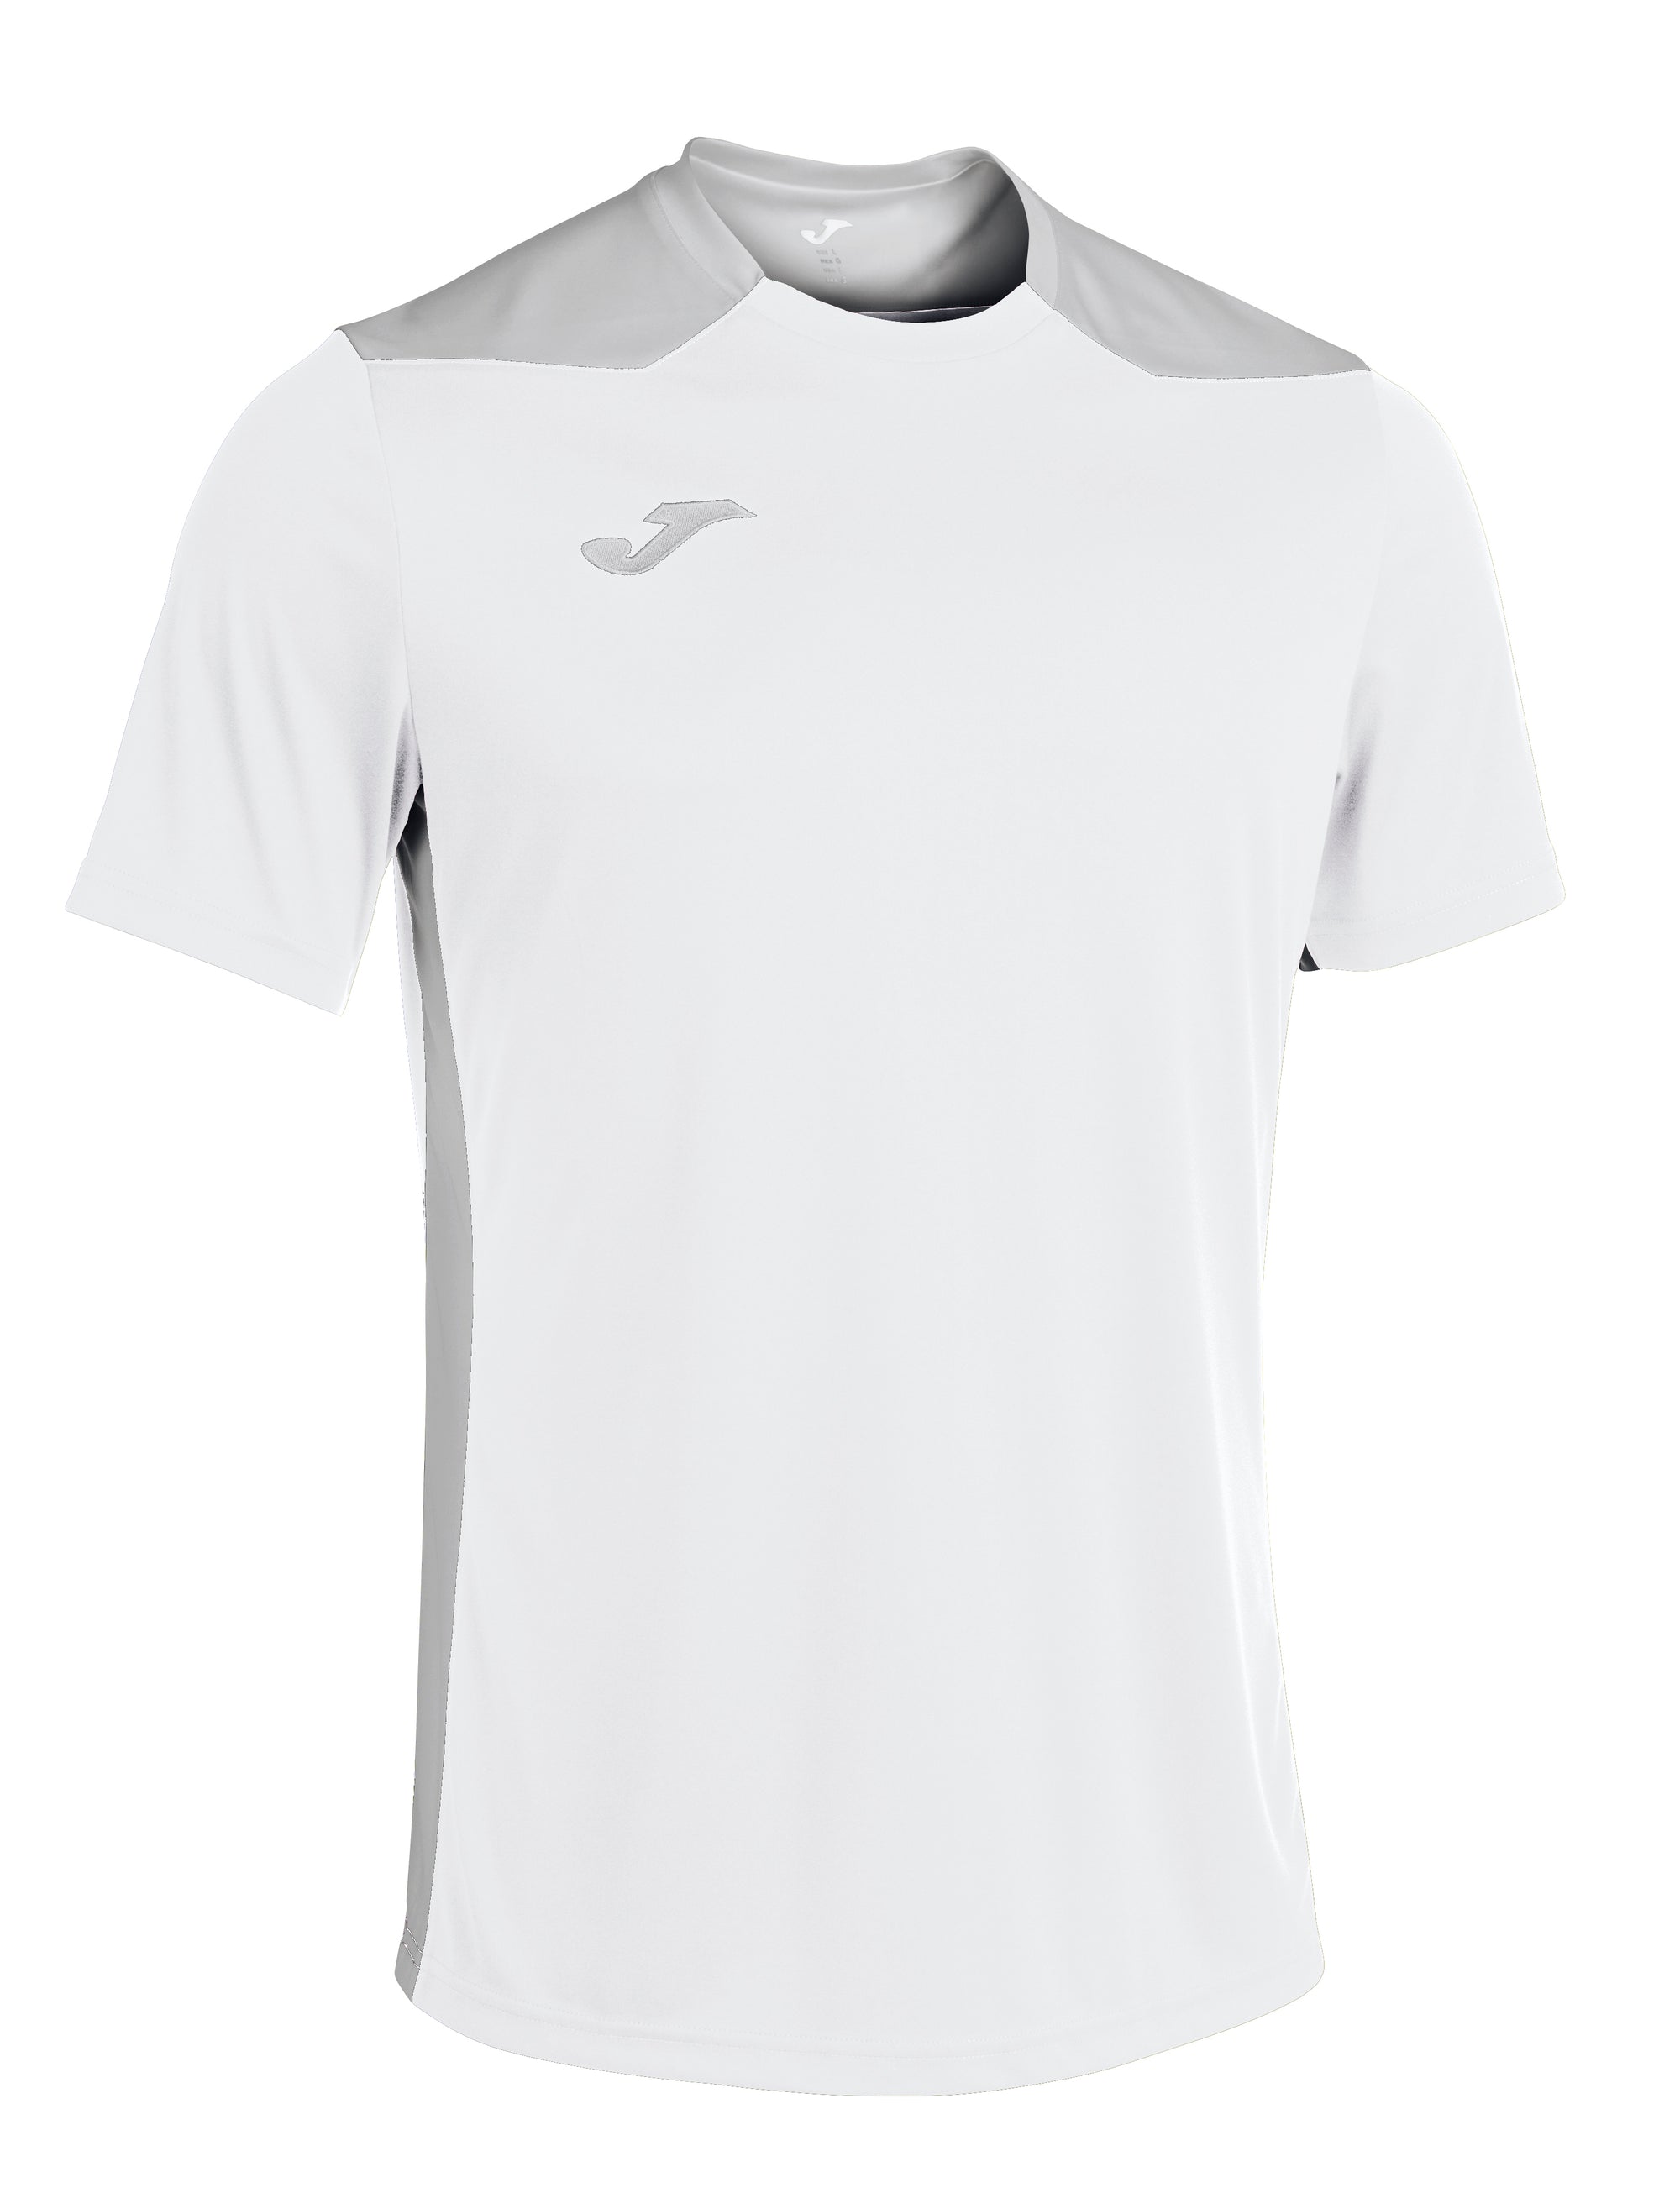 Joma Championship VI Short Sleeved T-Shirt - White/Silver